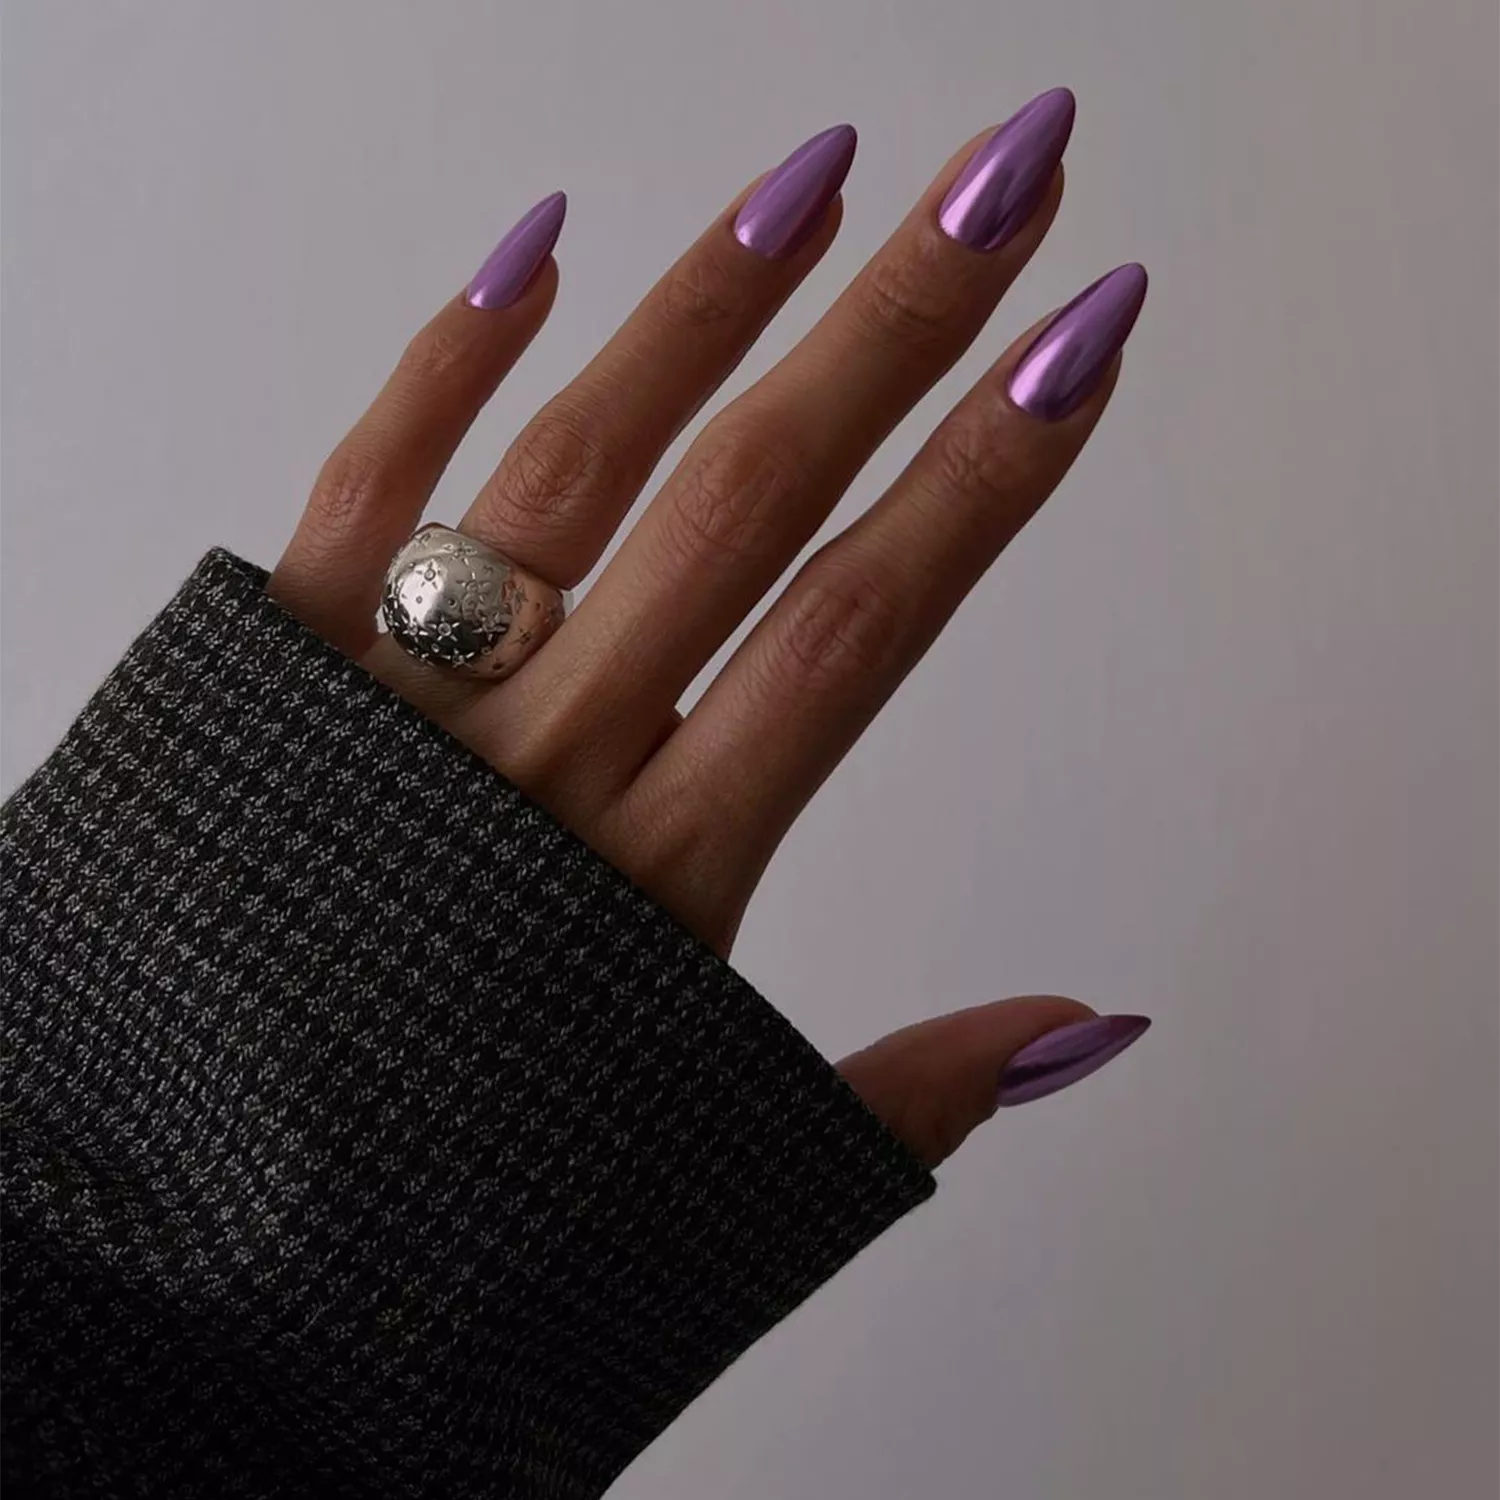 Lavender chrome nails 